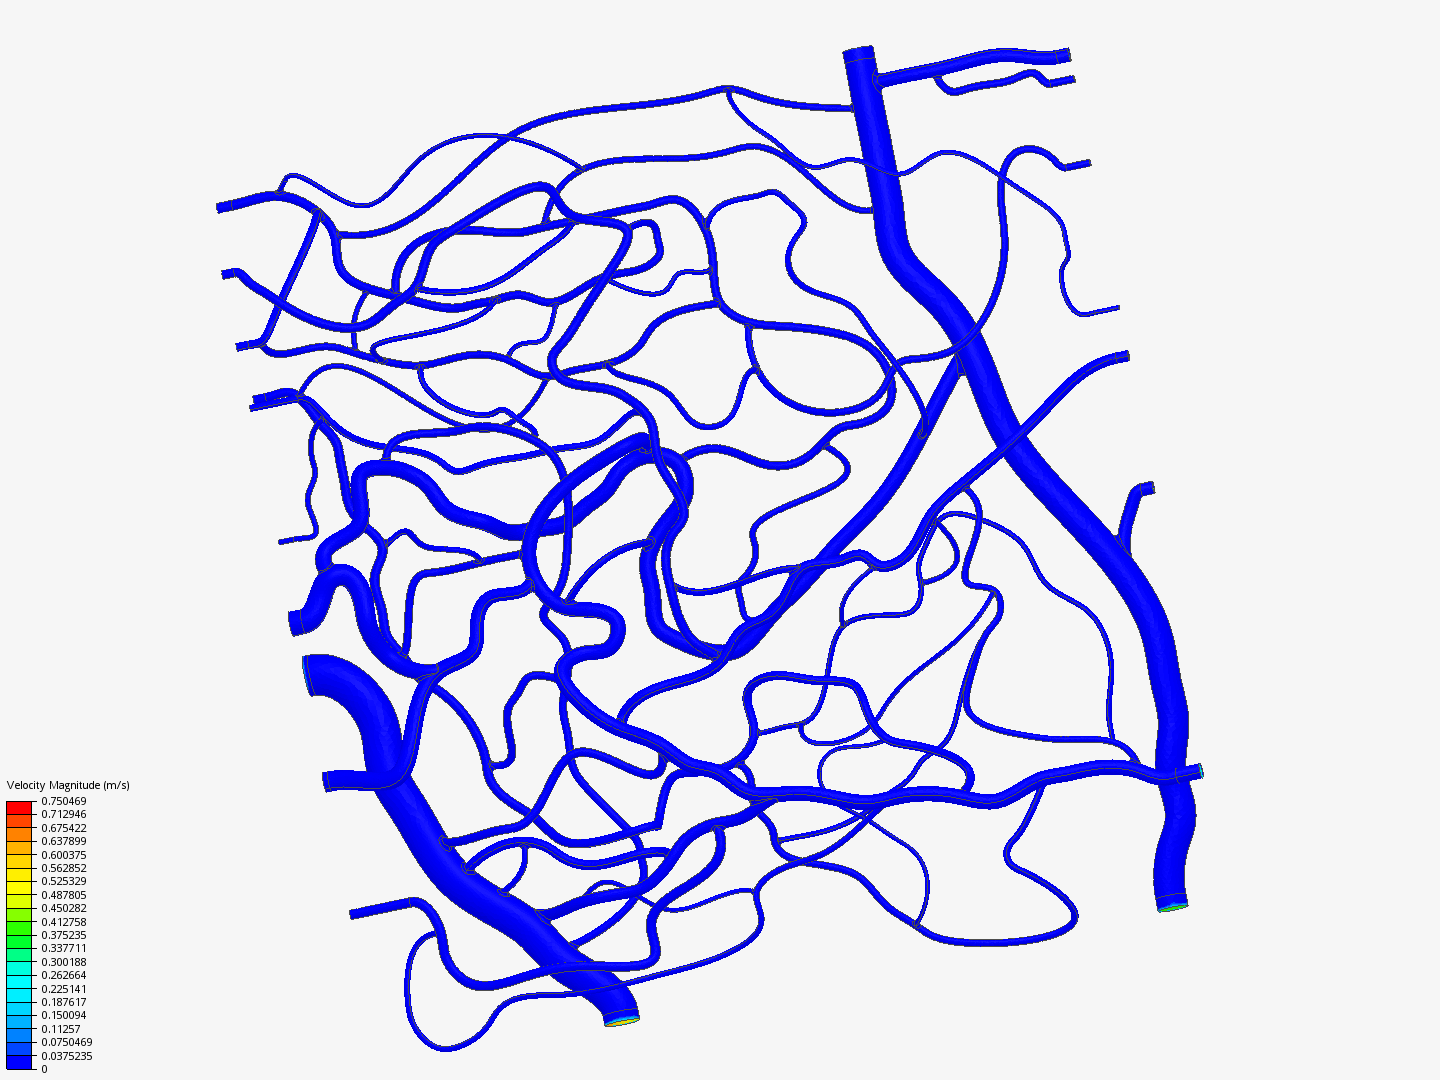 retina network image